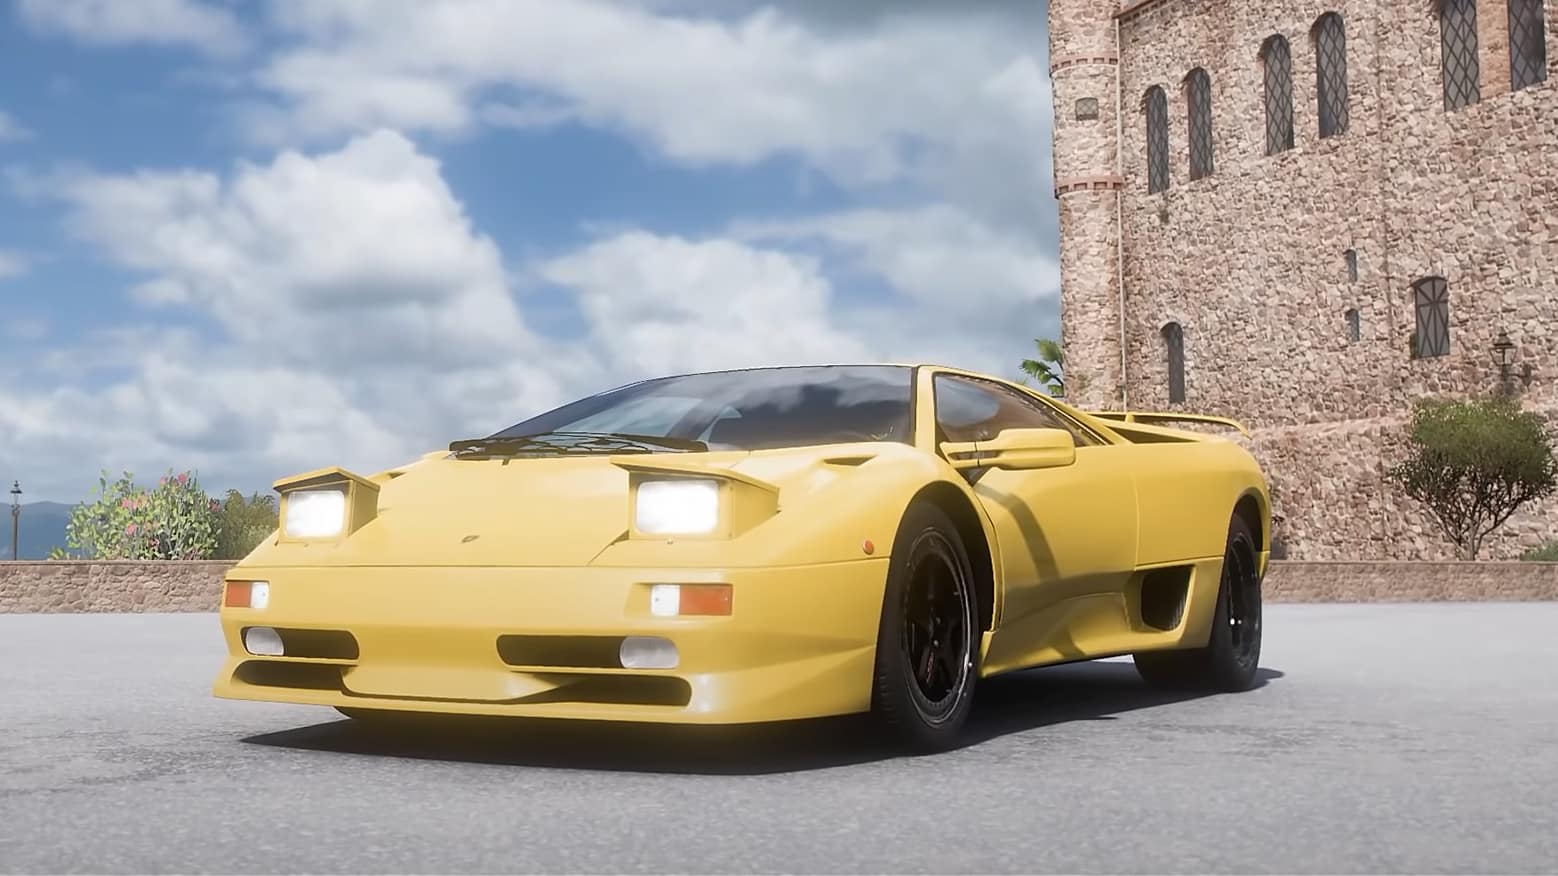 The Lamborghini Diablo GTR in Forza Horizon 5, one of the fastest drag cars